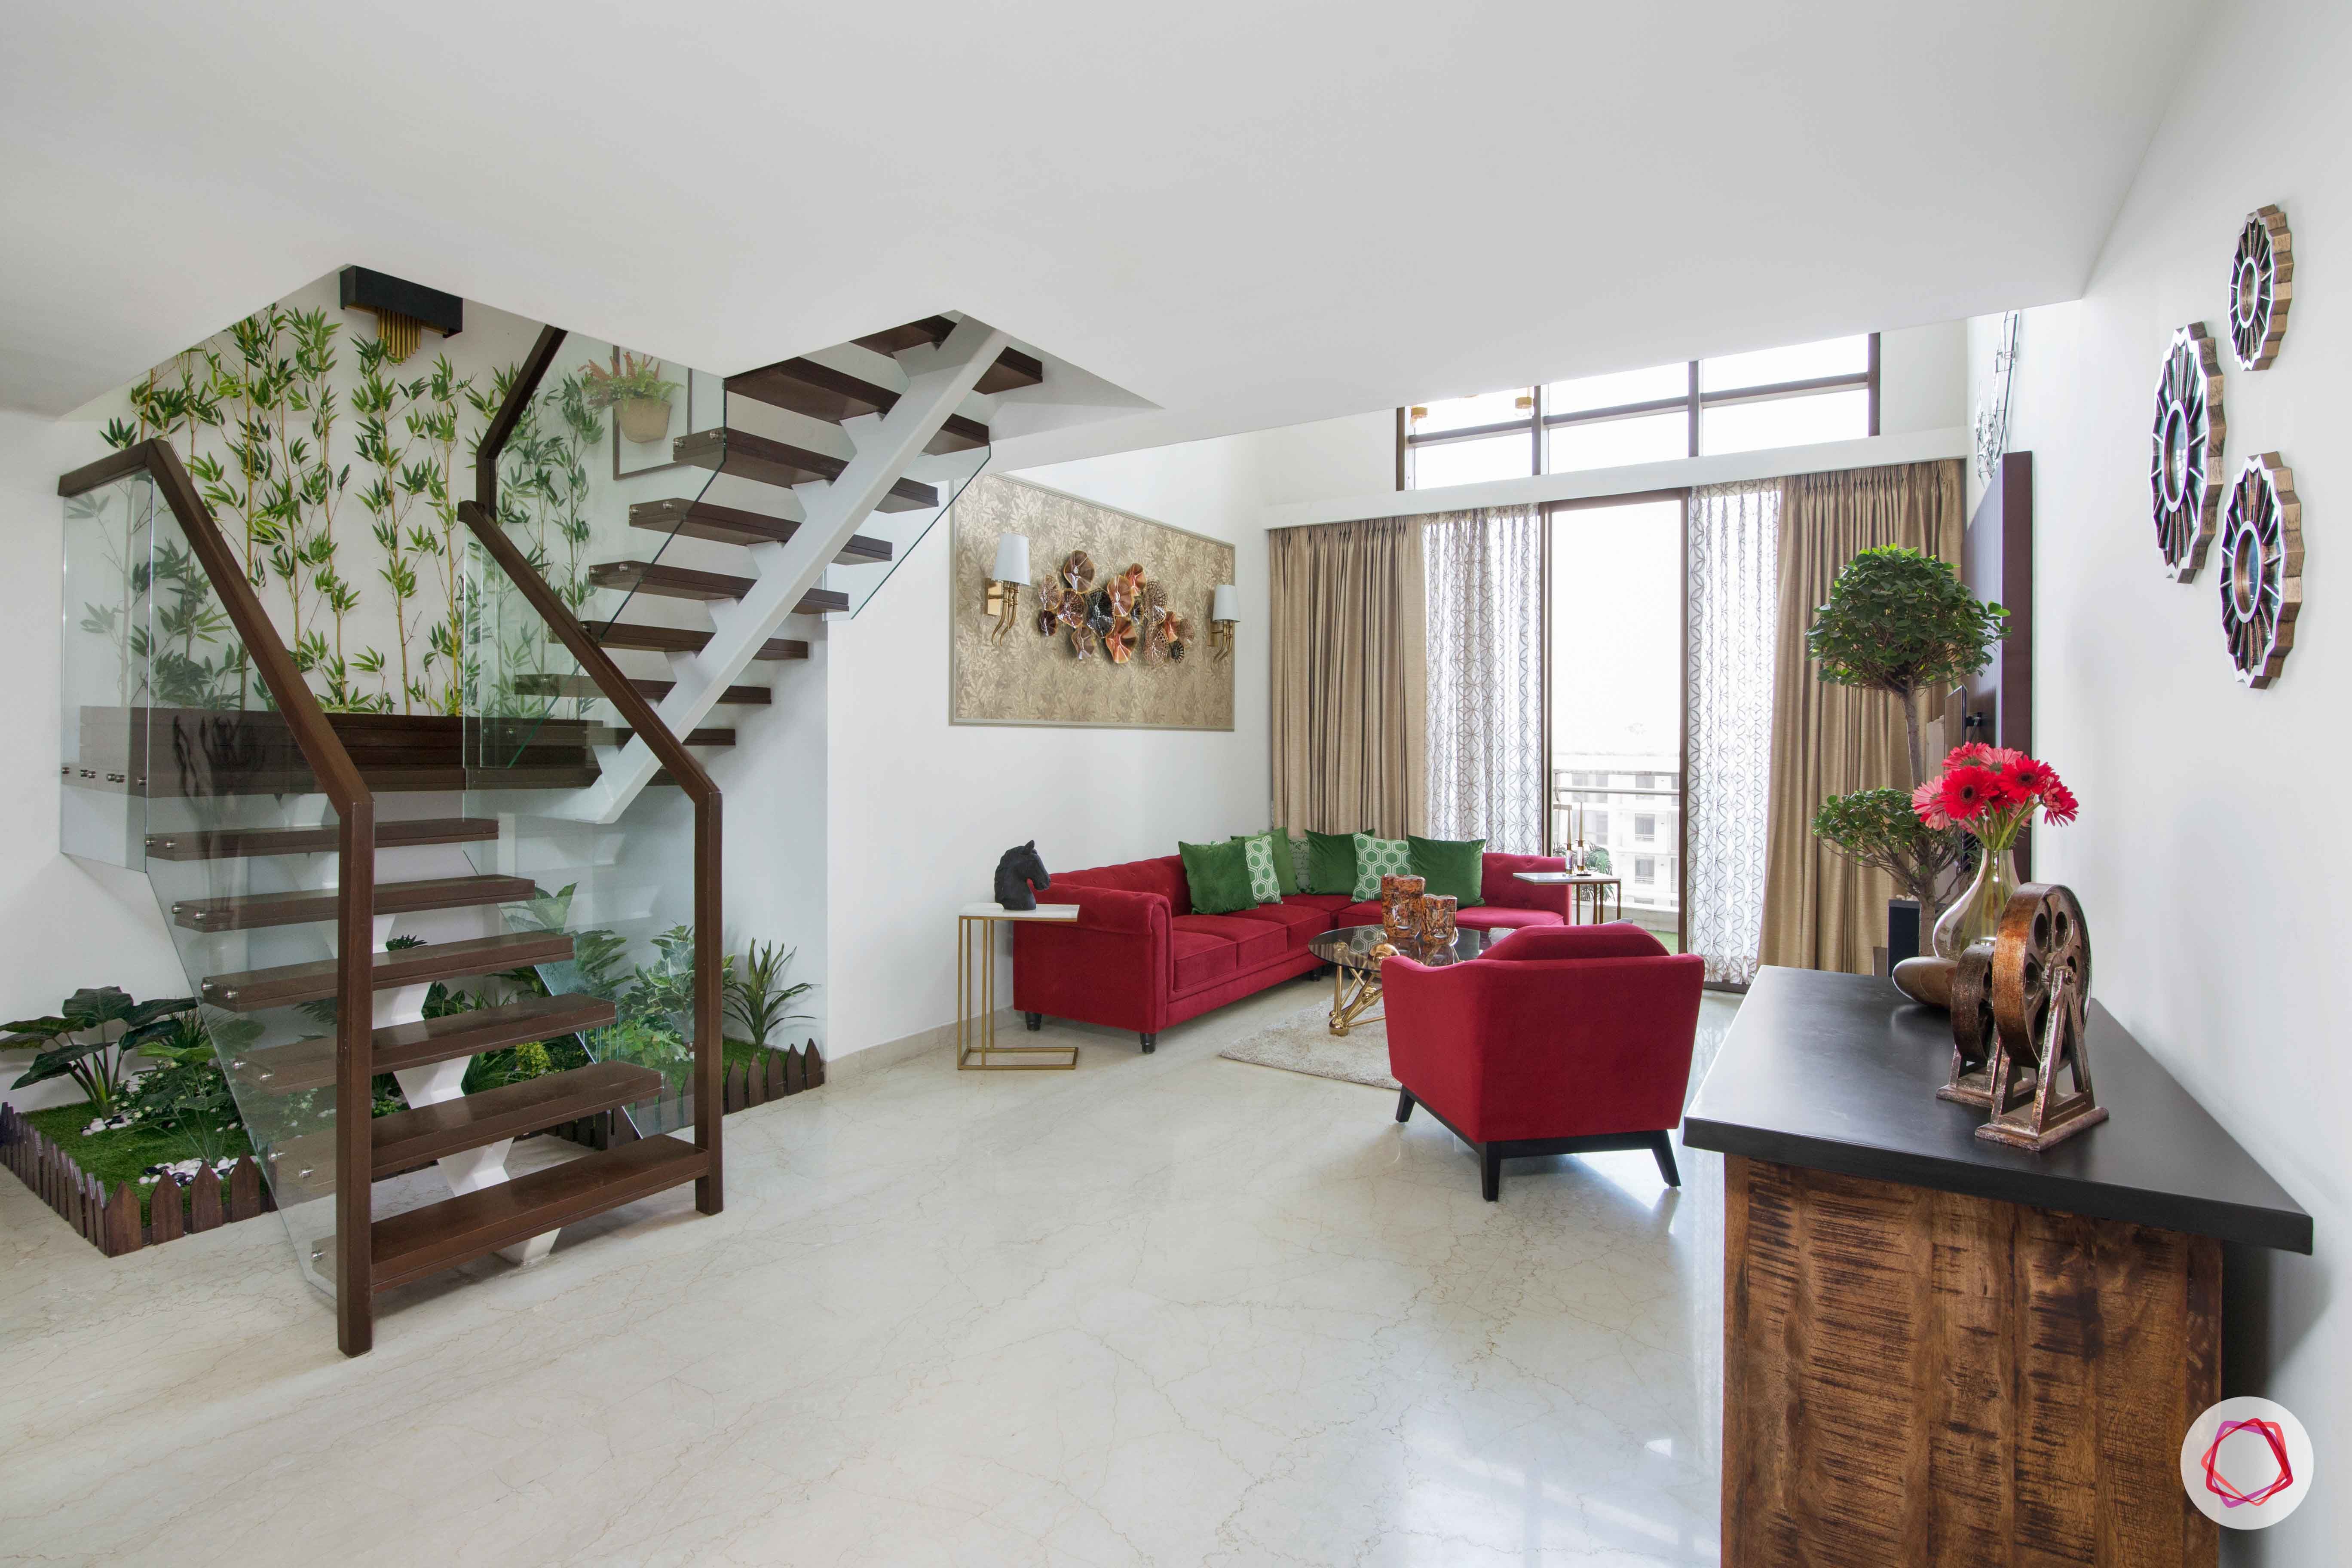 duplex house images-bar unit designs-red sofa designs-duplex house designs